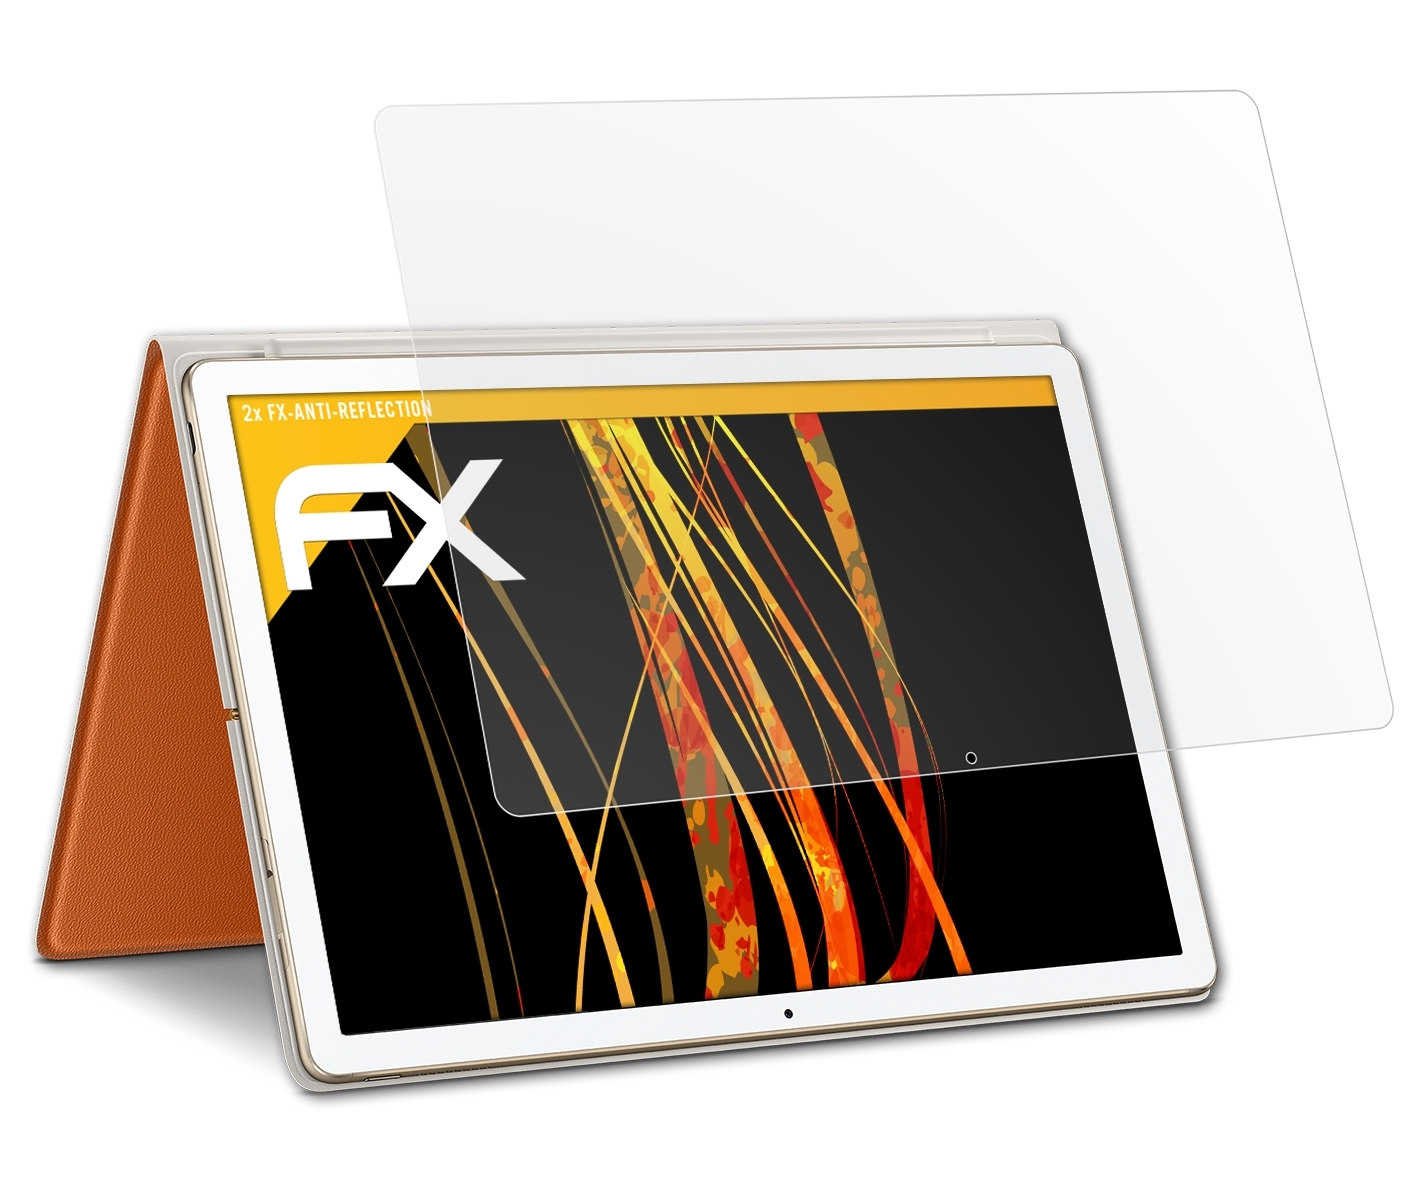 E) MateBook 2x Huawei Displayschutz(für ATFOLIX FX-Antireflex